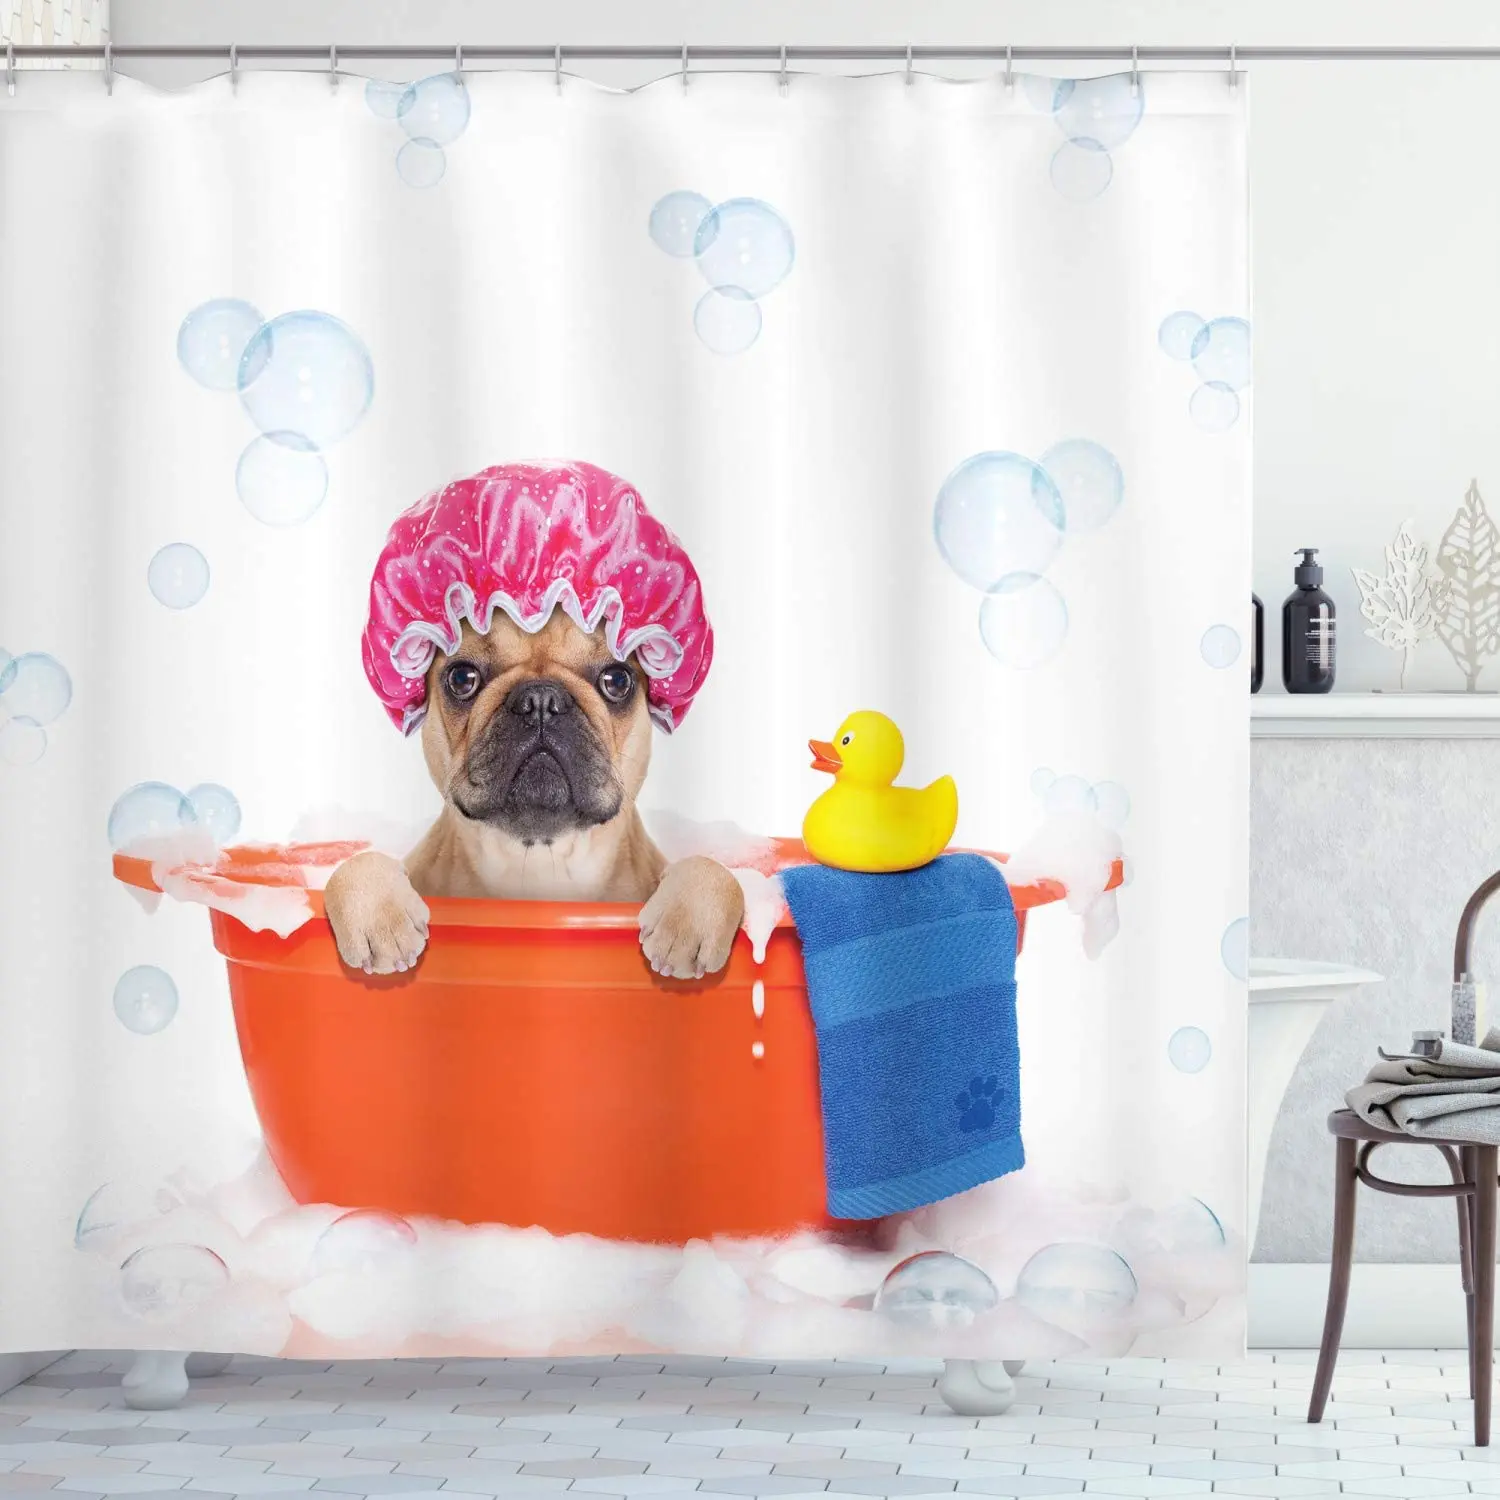 3D Cute Funny Dog Shower Curtain French Bulldog Having Bath in Tub Rubber Duck Bubble Theme Bathroom Decor Curtains With Hooks